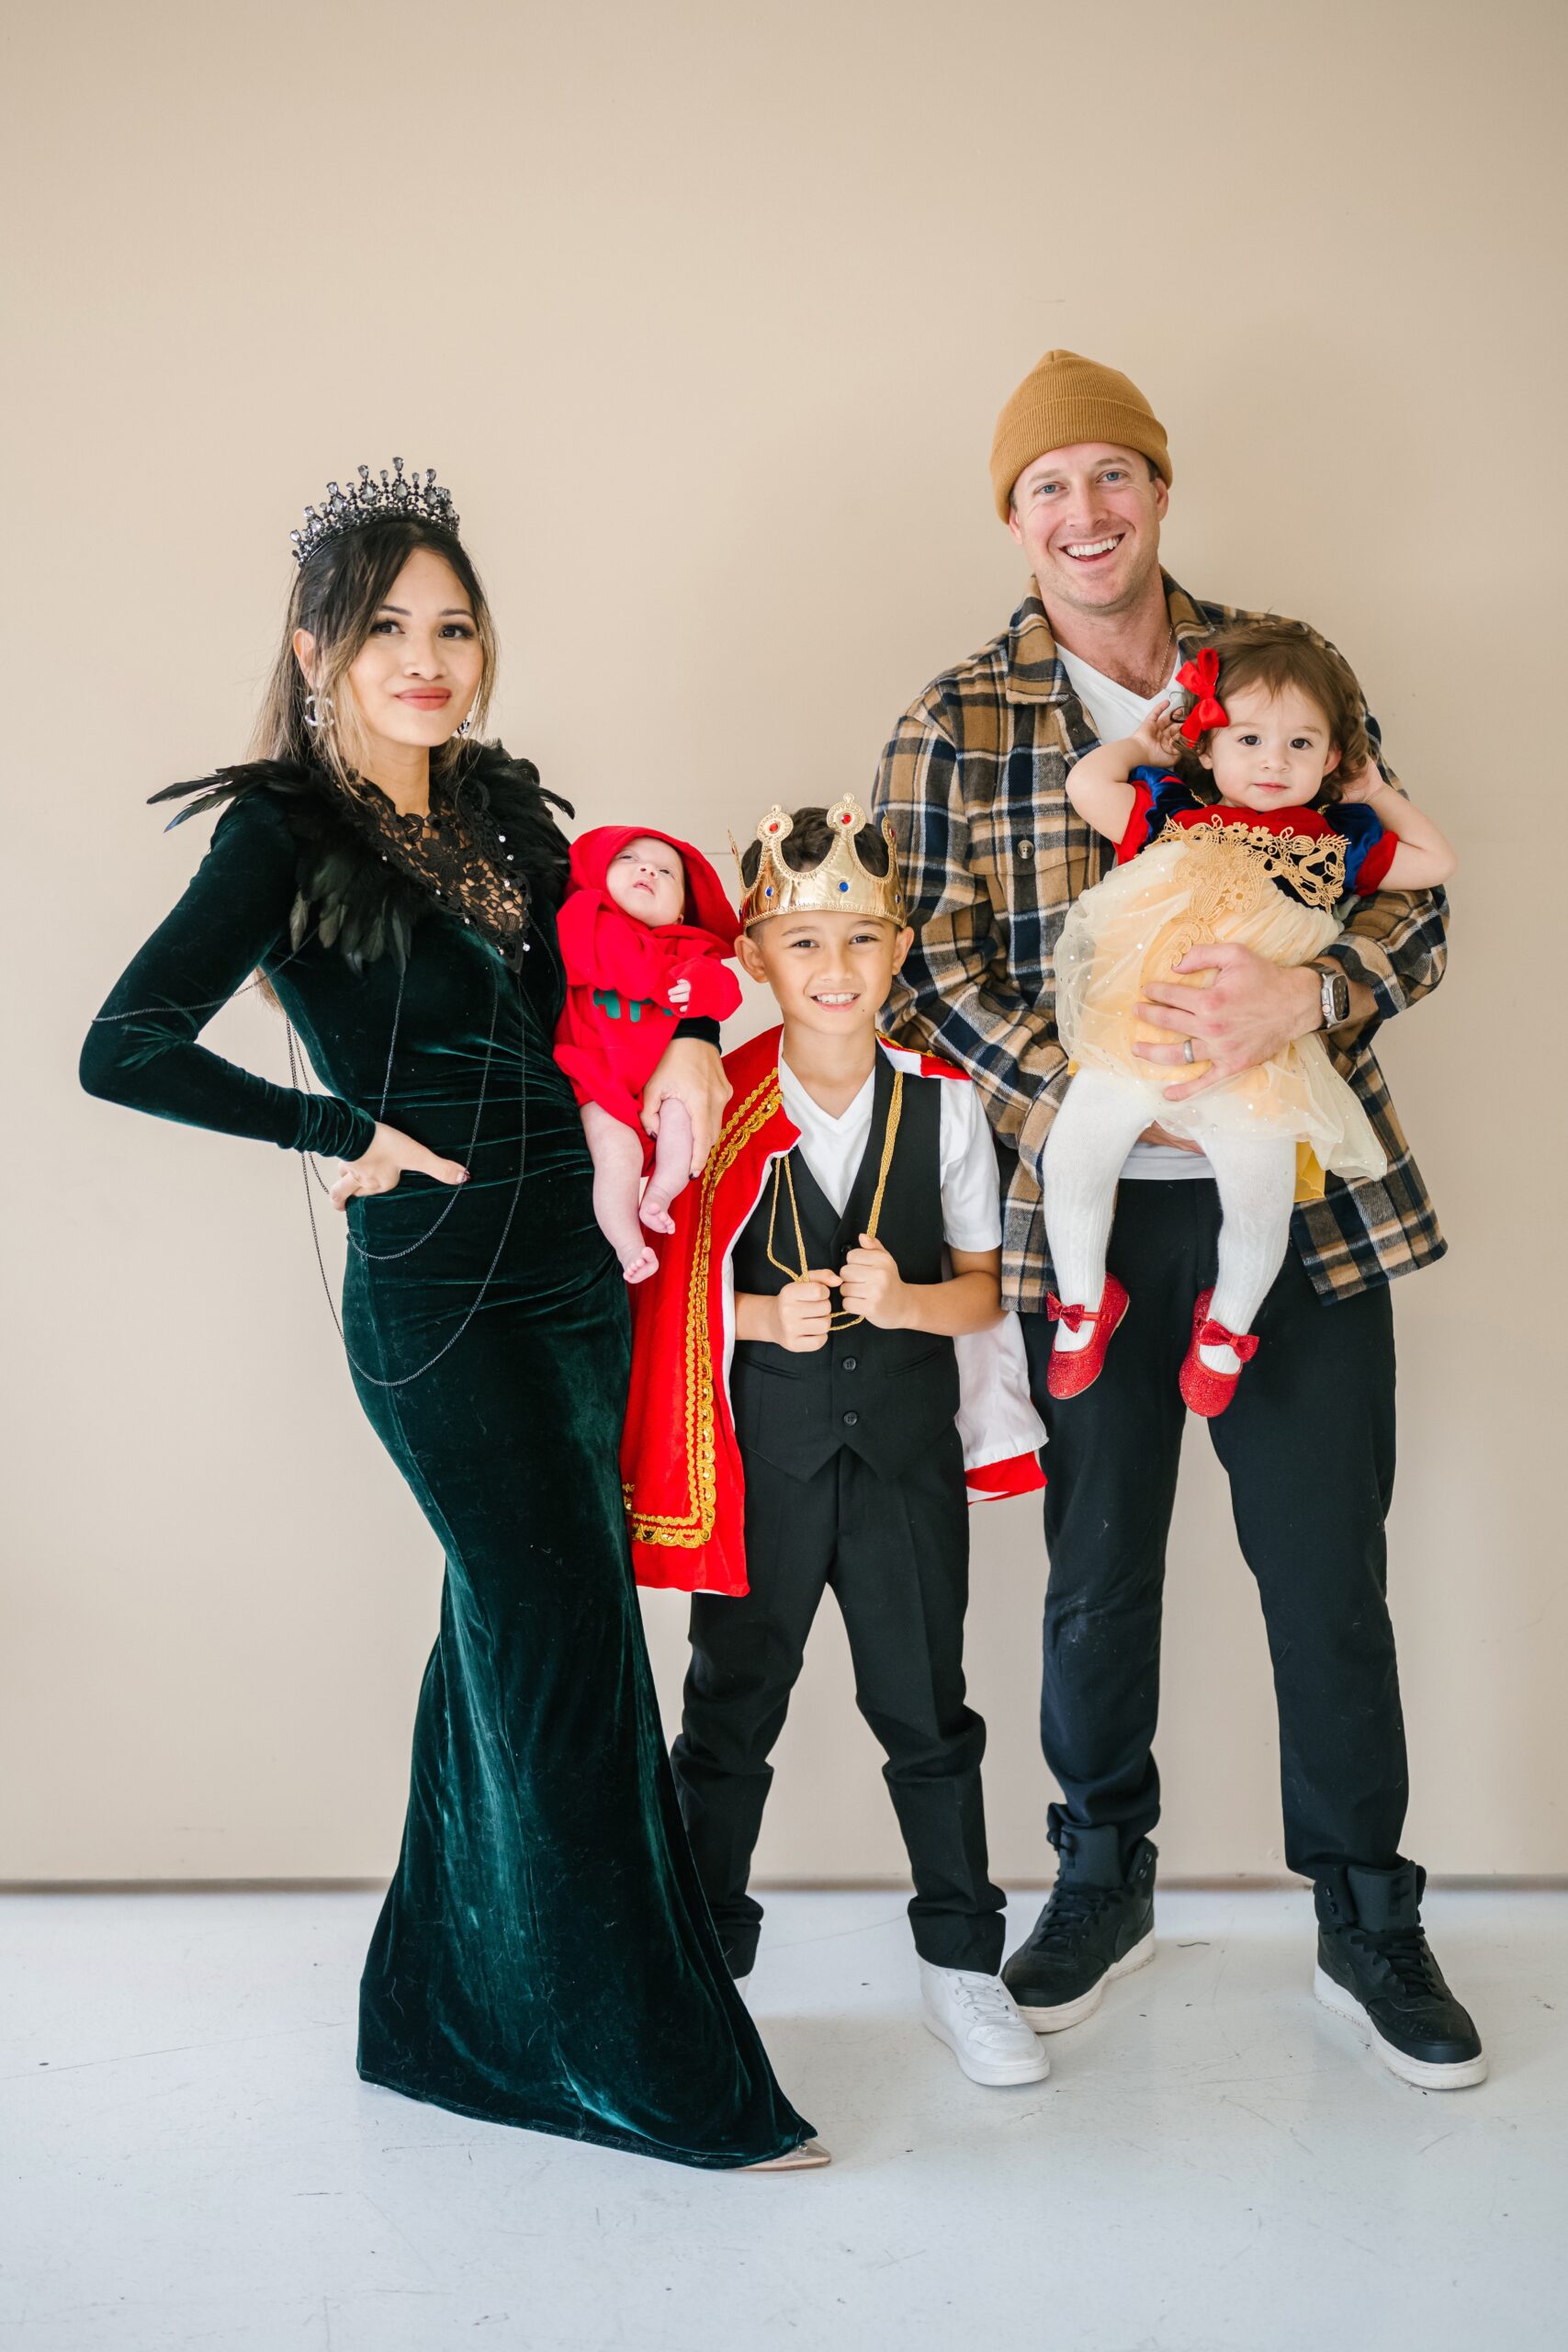 snow white family costumes, Halloween costumes, family halloween costumes 